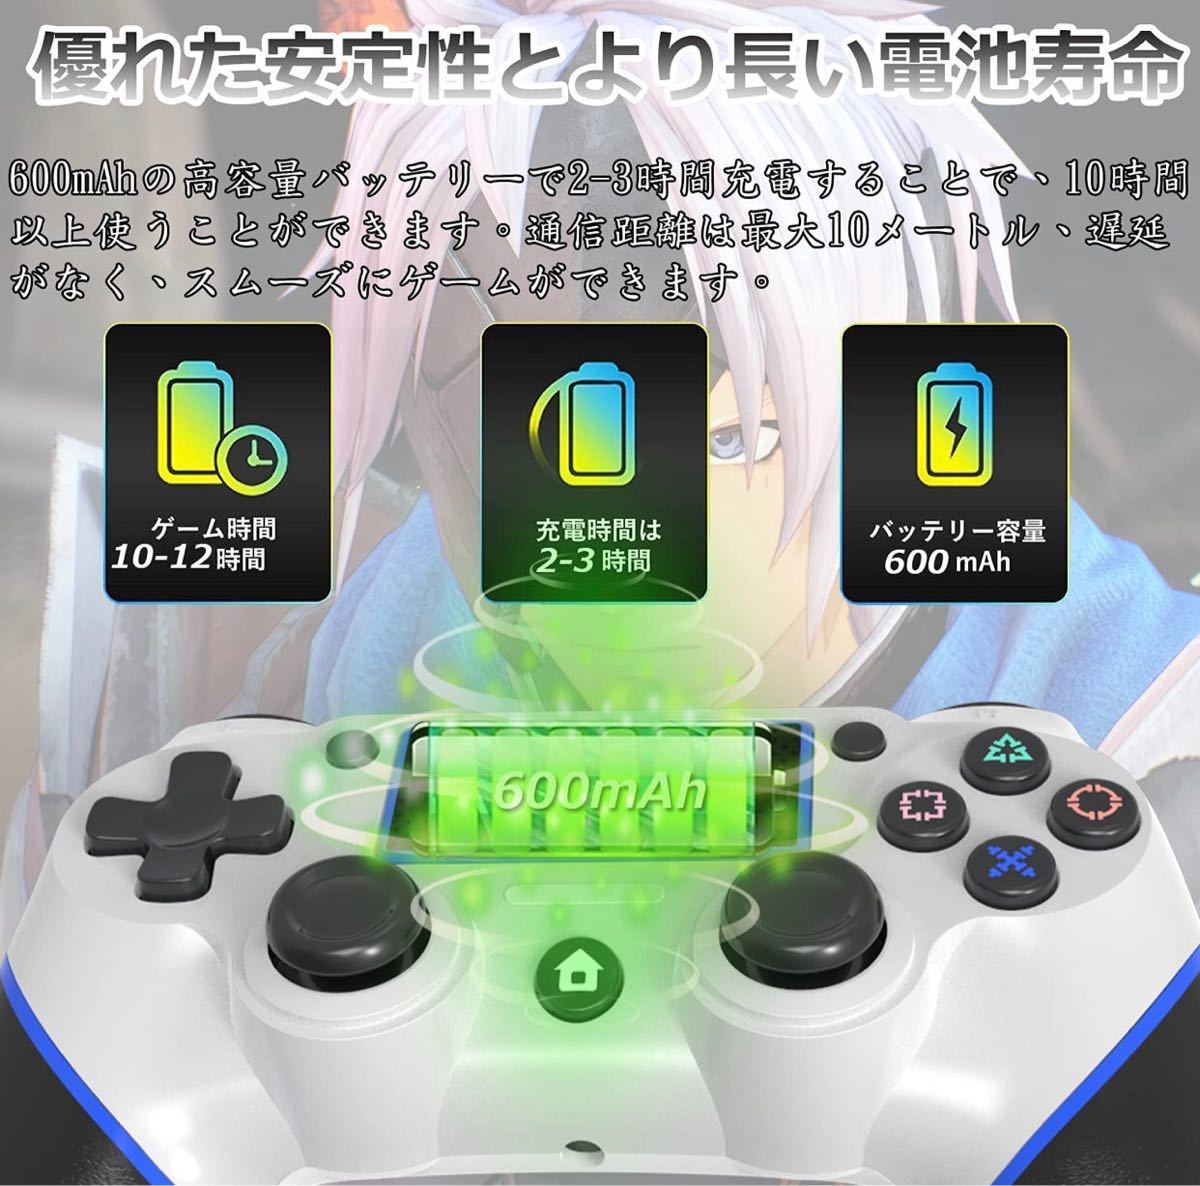 PS4 コントローラー Cozylife Bluetooth 600m 二重振動 PS4コントローラー ワイヤレスコントローラー